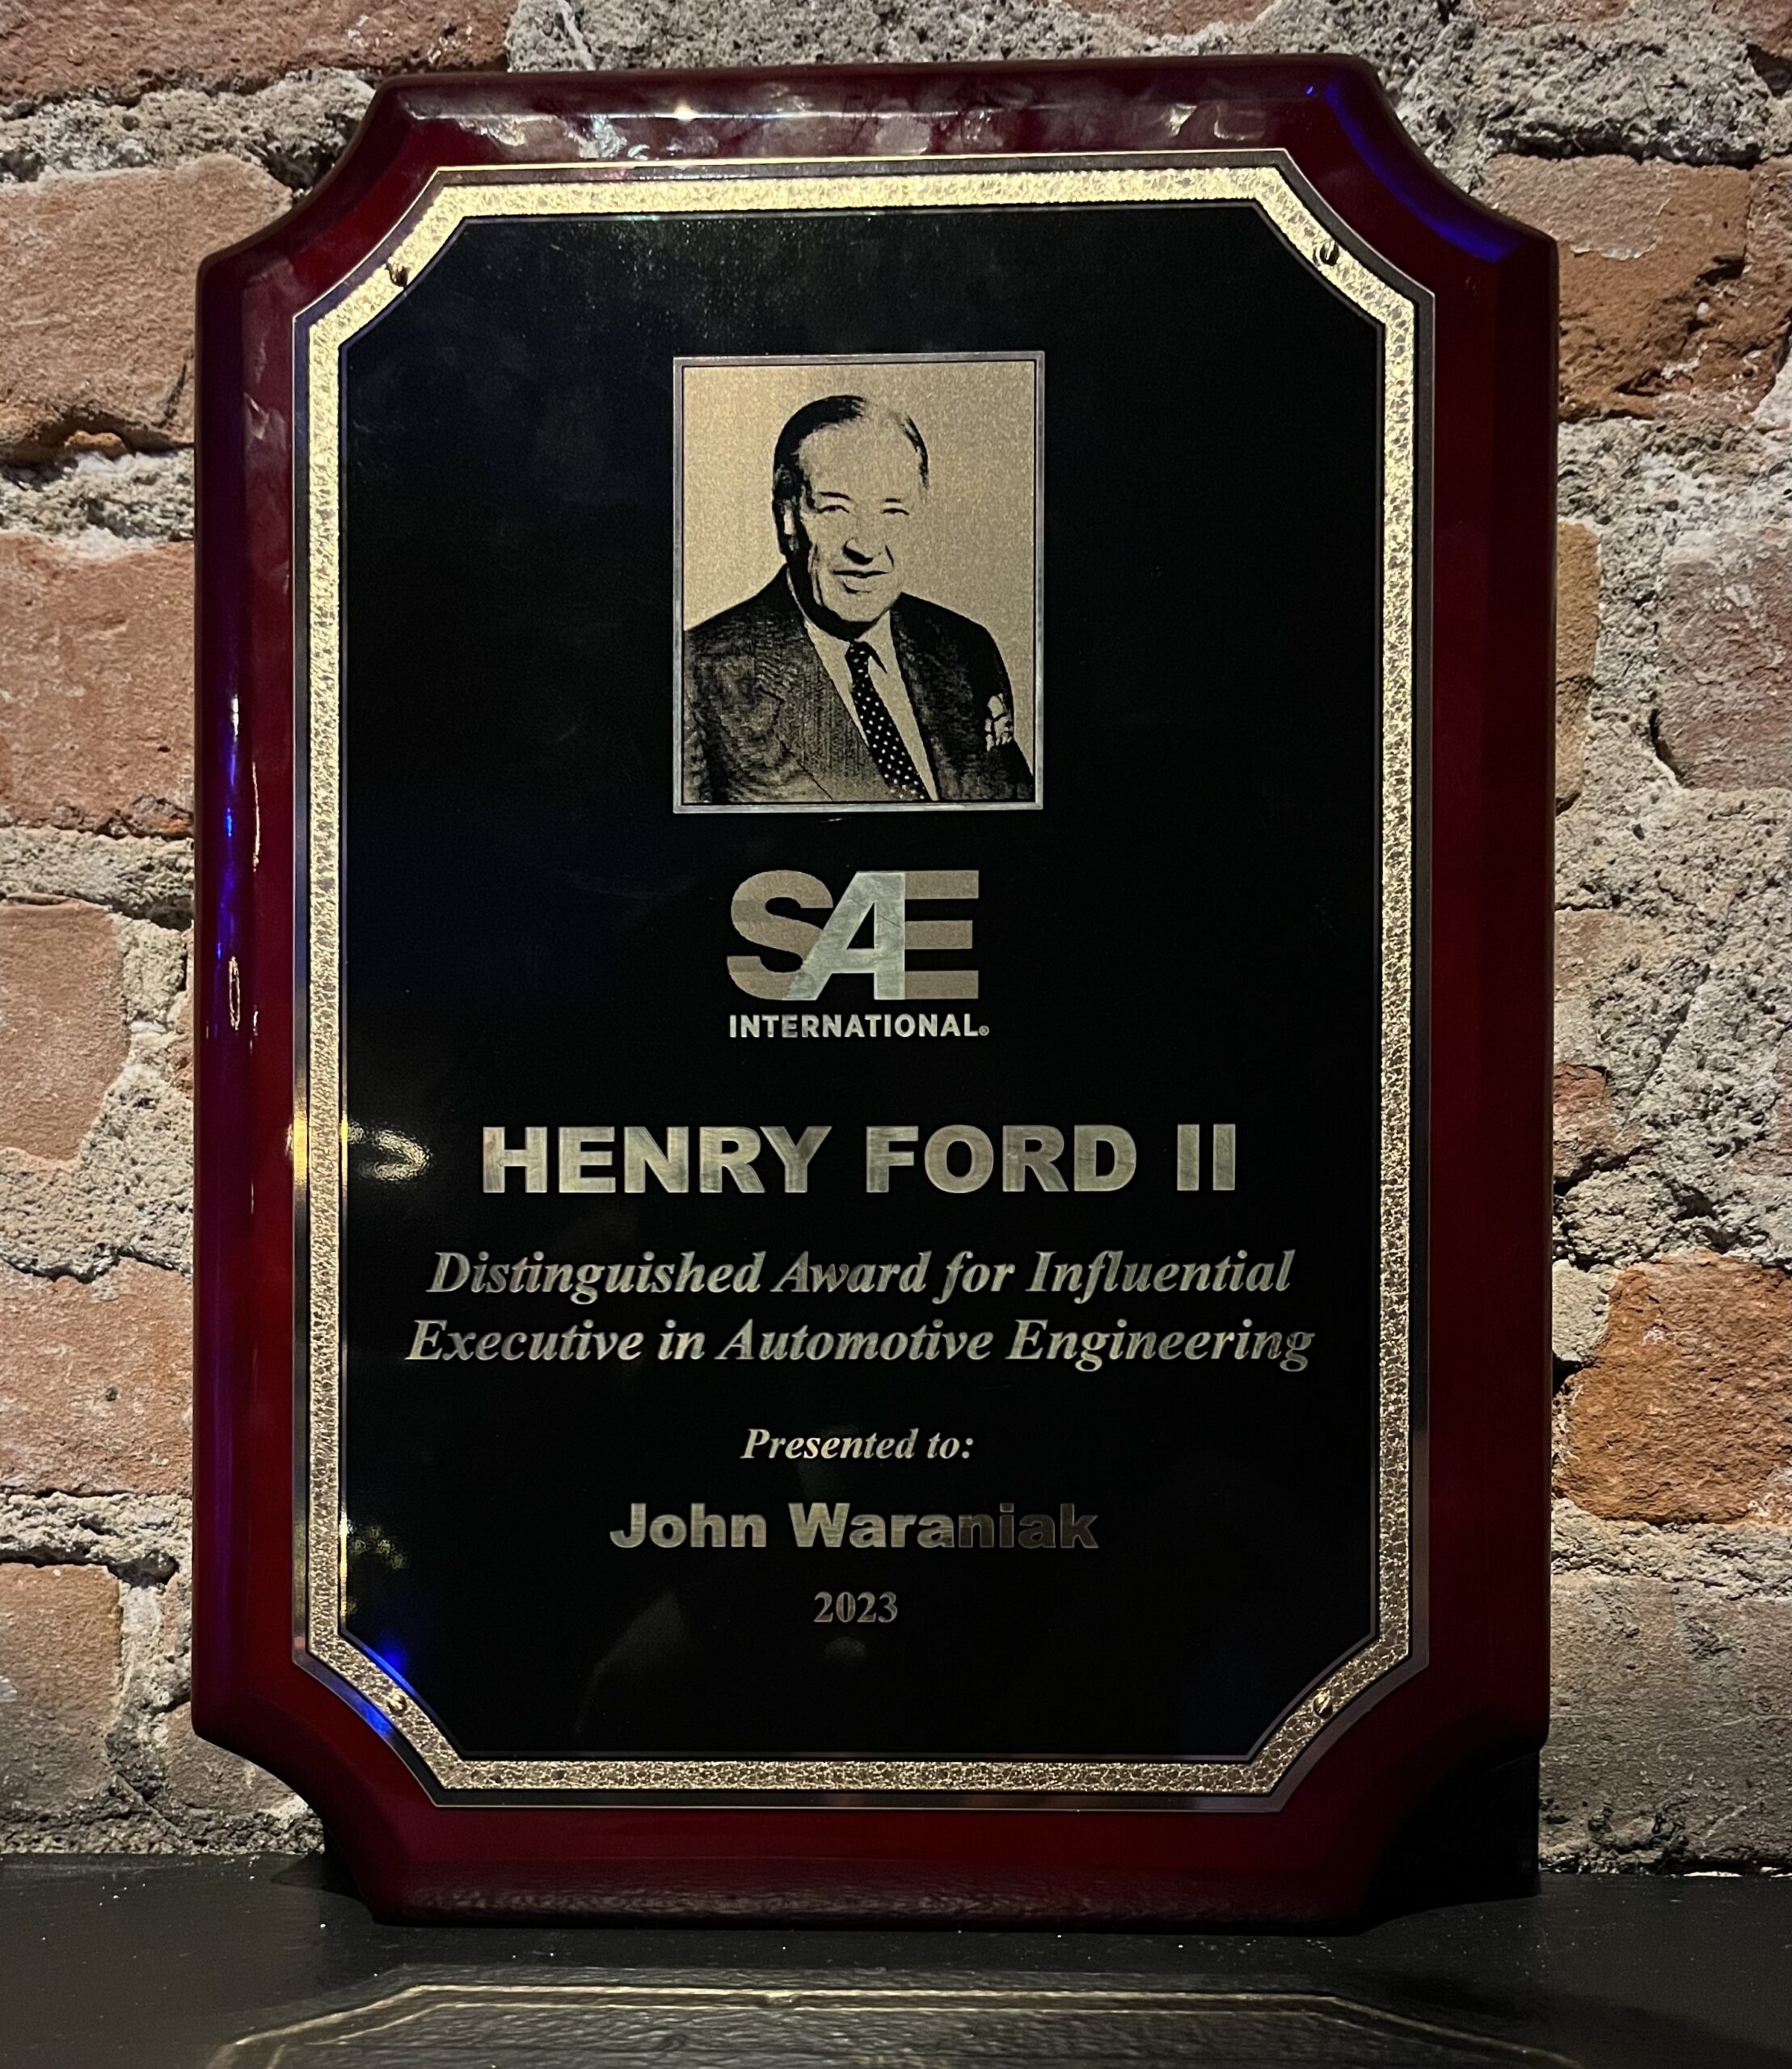 Henry Ford II award